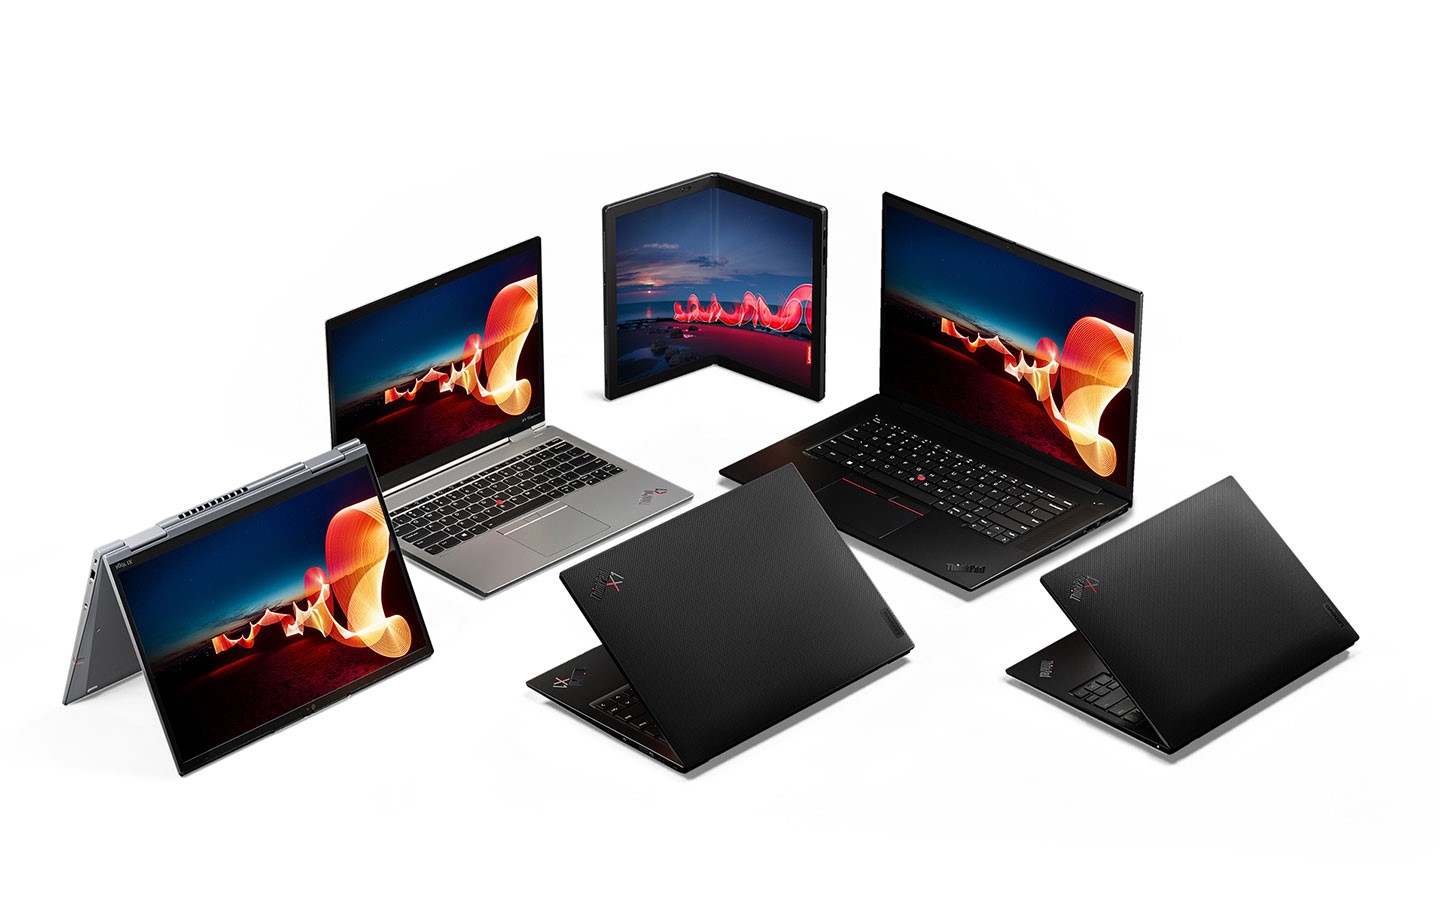 Lenovo 接手 ThinkPad 後仍不斷堅持創新，也讓整個系列更顯多元化。